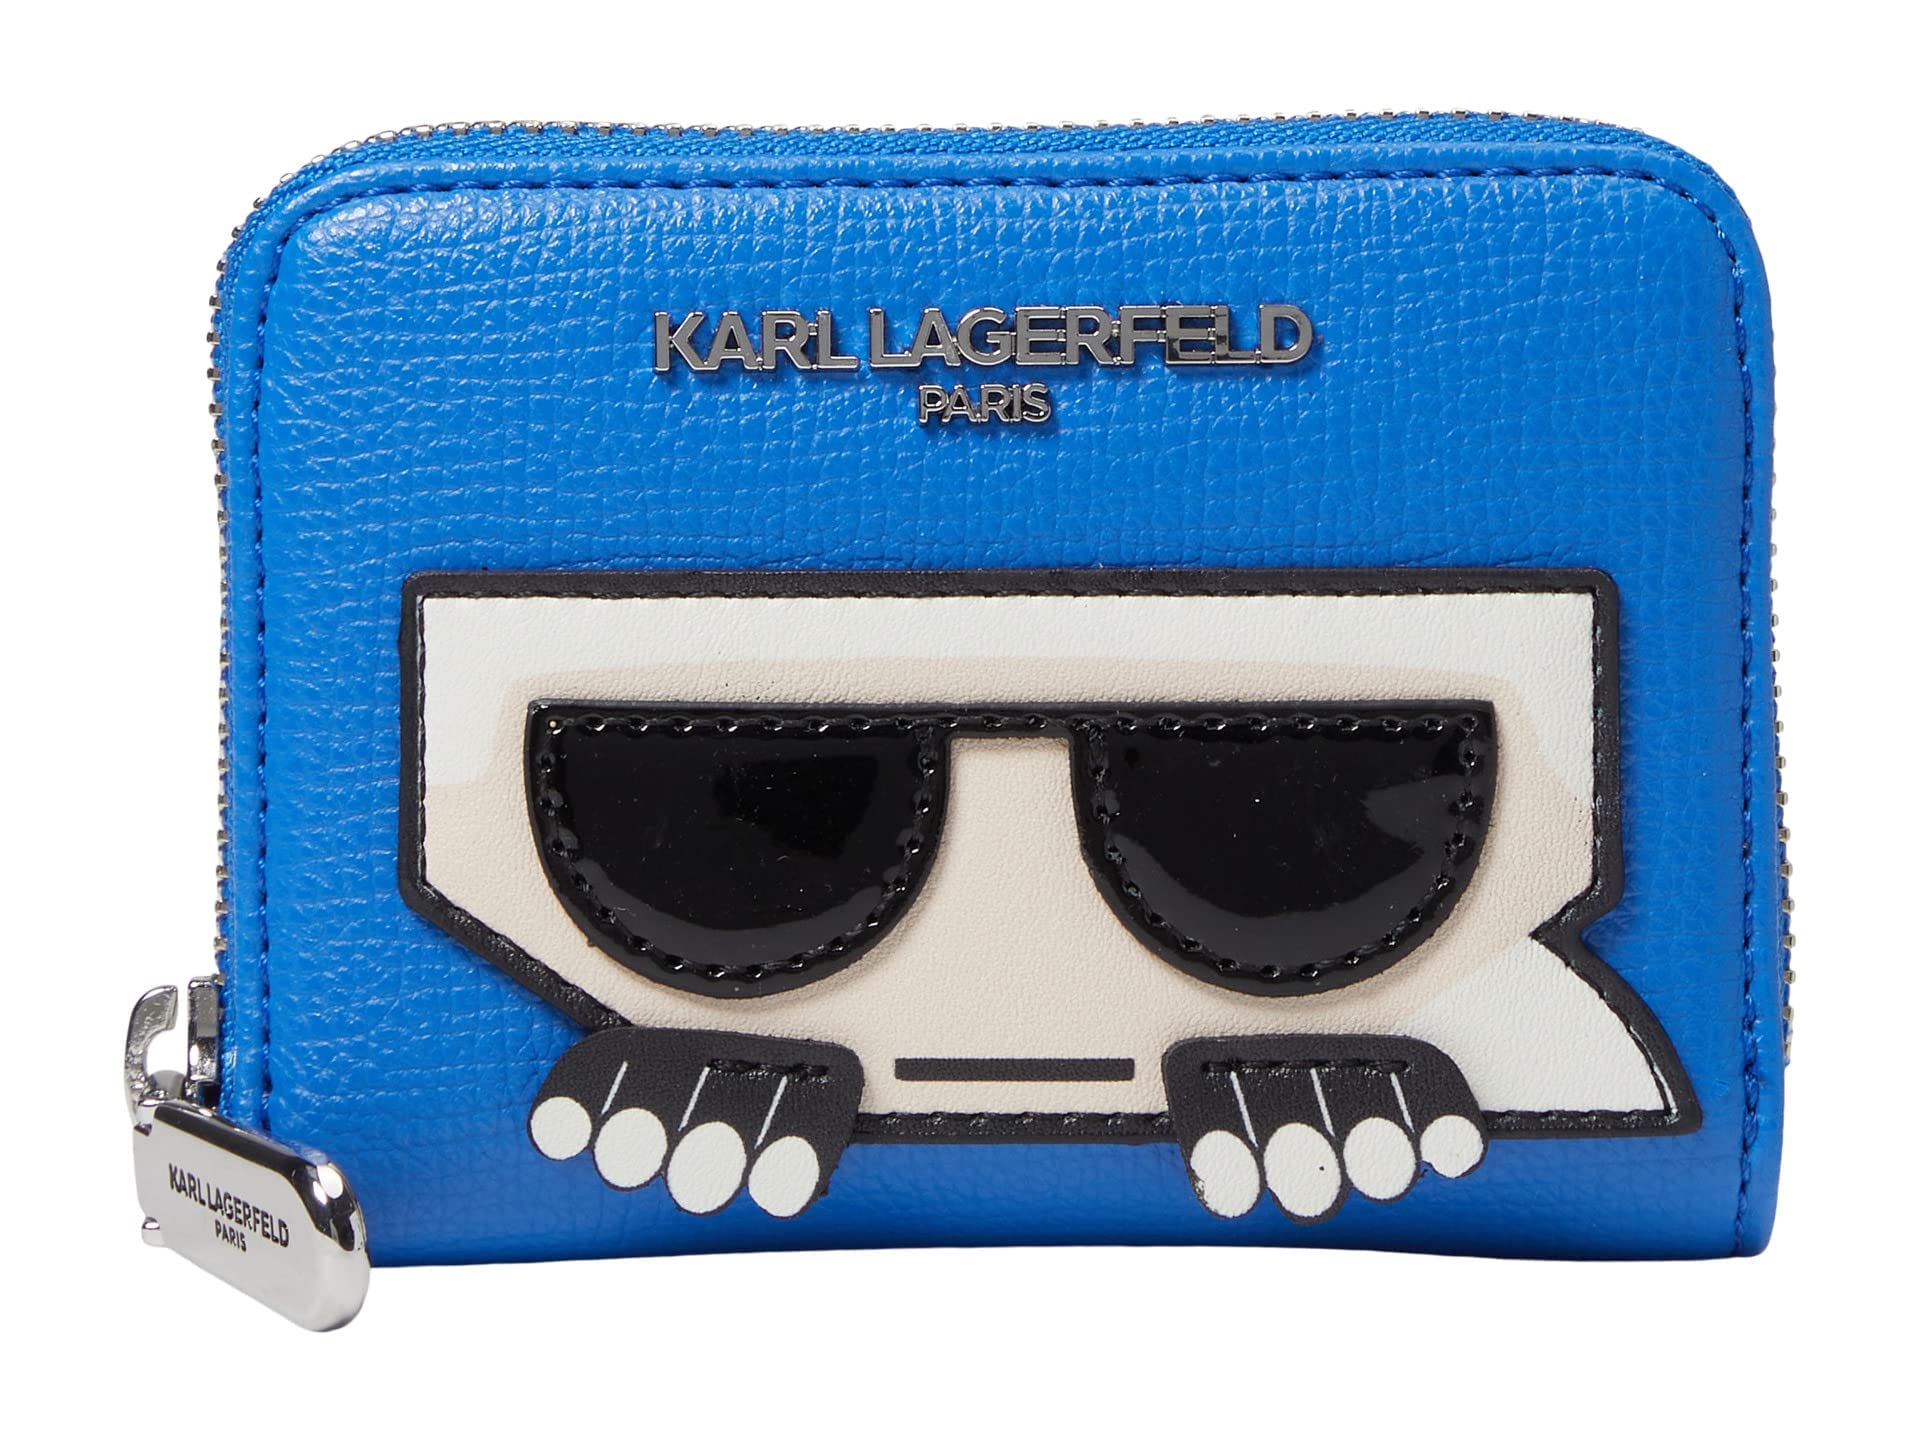 Karl Lagerfeld Paris Maybelle SLG Essential Sm Wallet